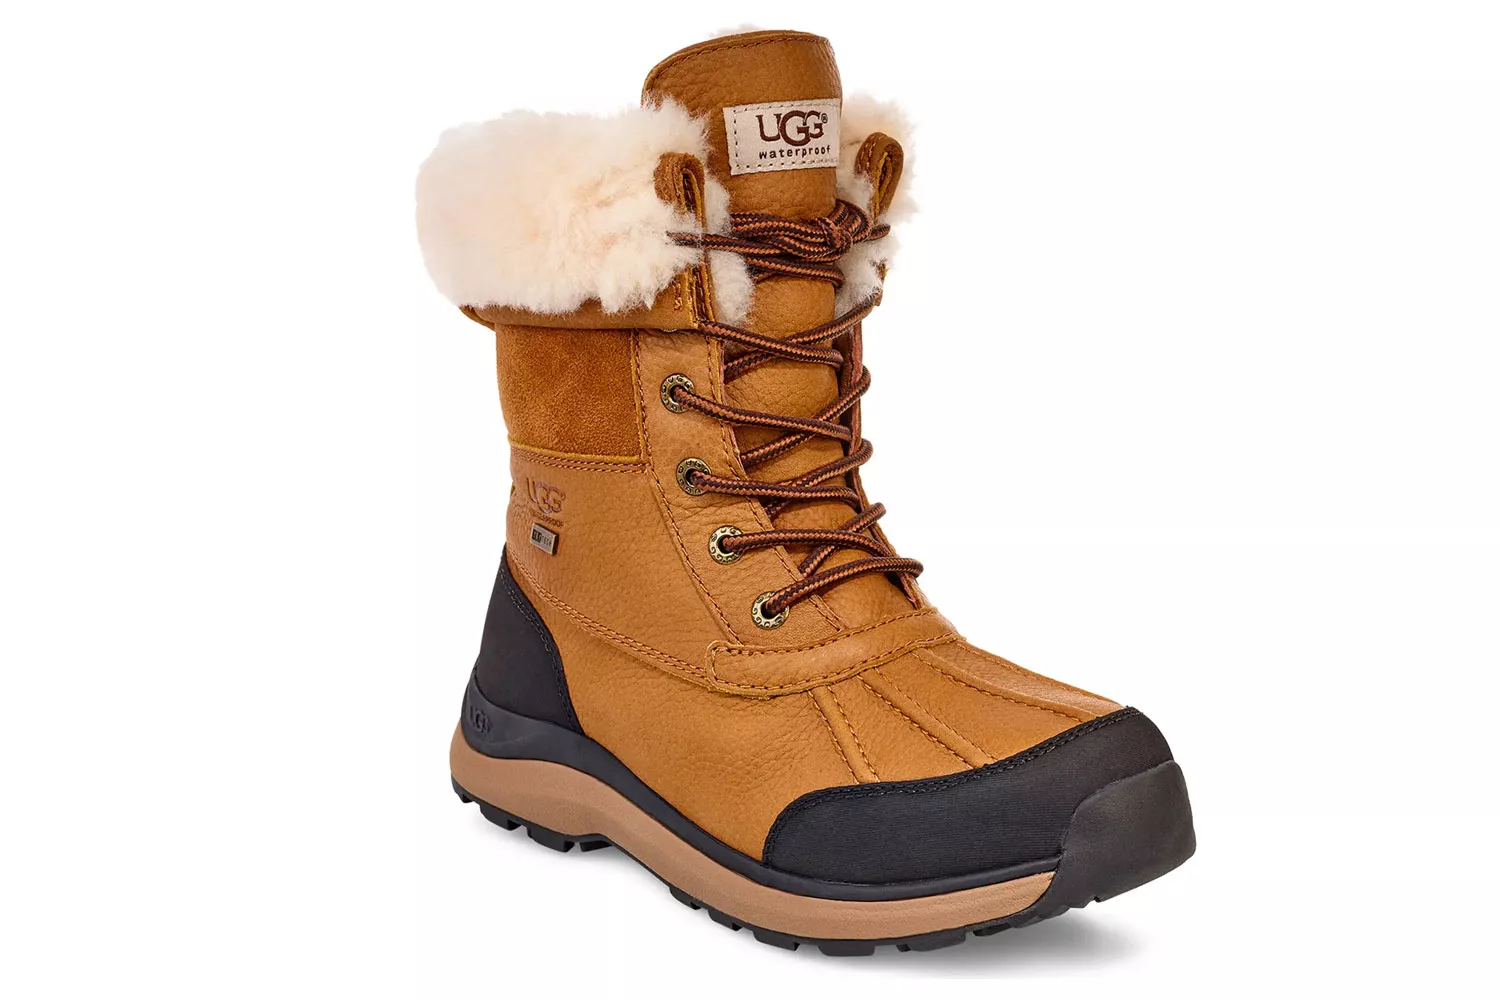 The Most Comfortable Winter Boots: UGG Adirondack III Boot